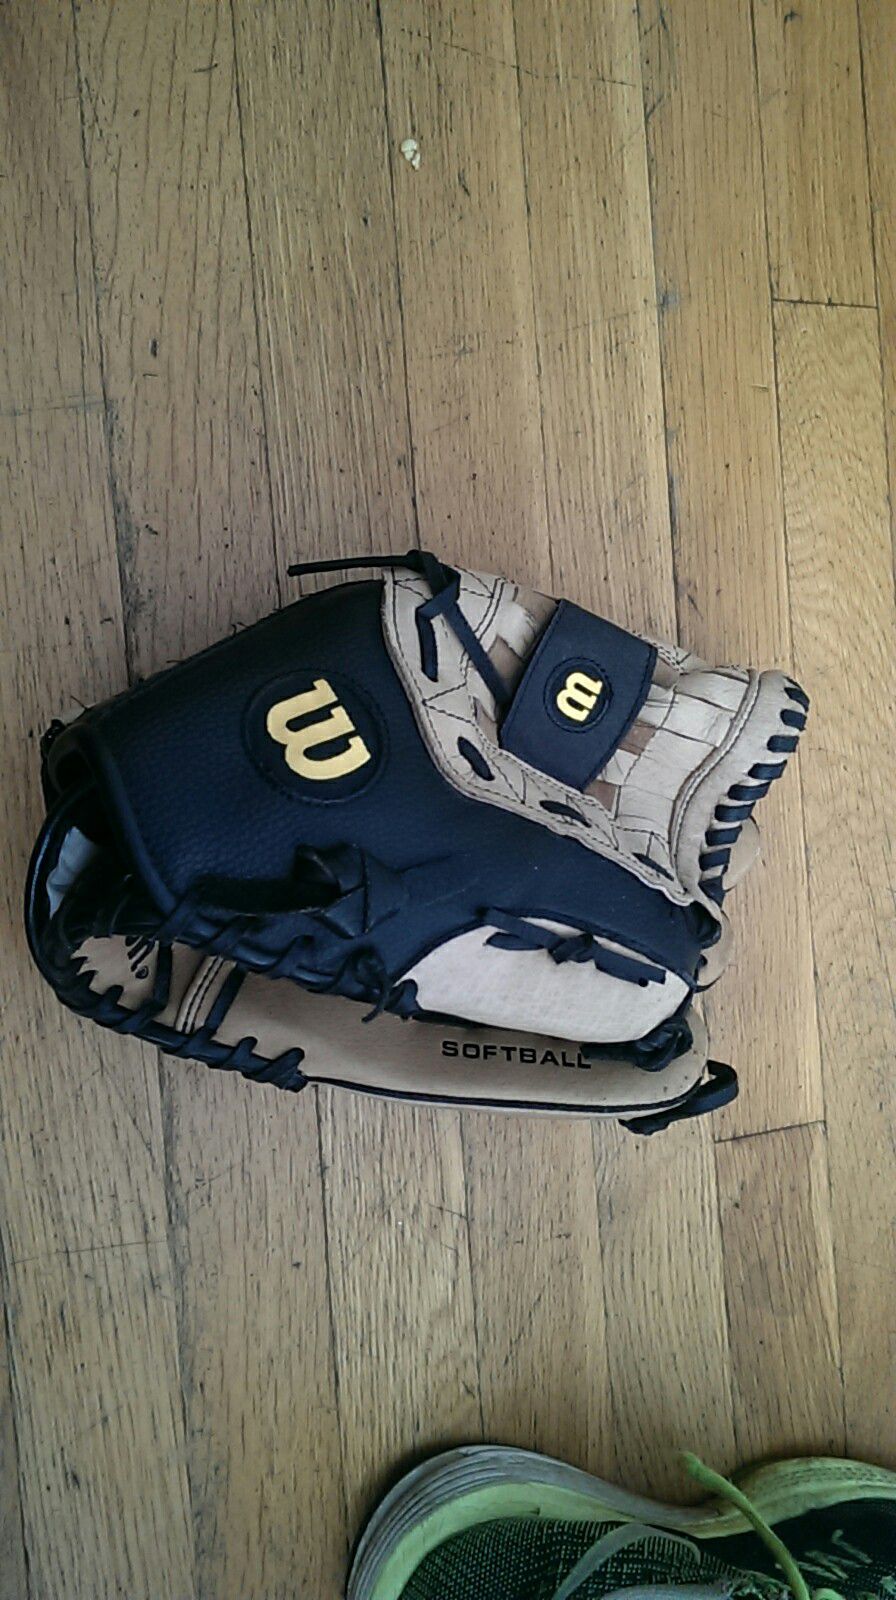 Wilson Leather Softball Glove 13" oversized pocket